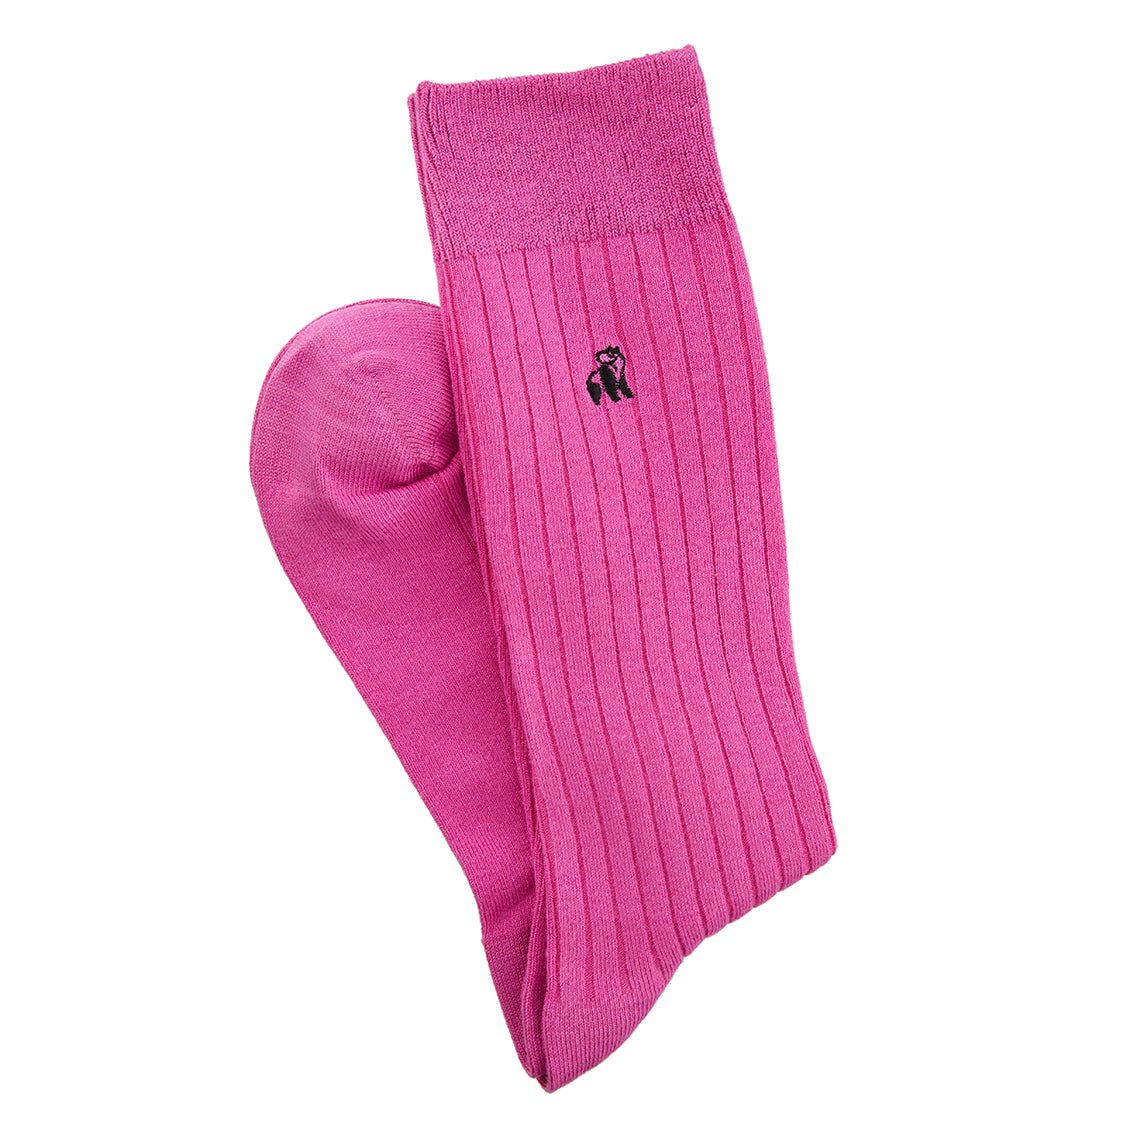 Bamboo Socks - Rich Pink - Life of Riley